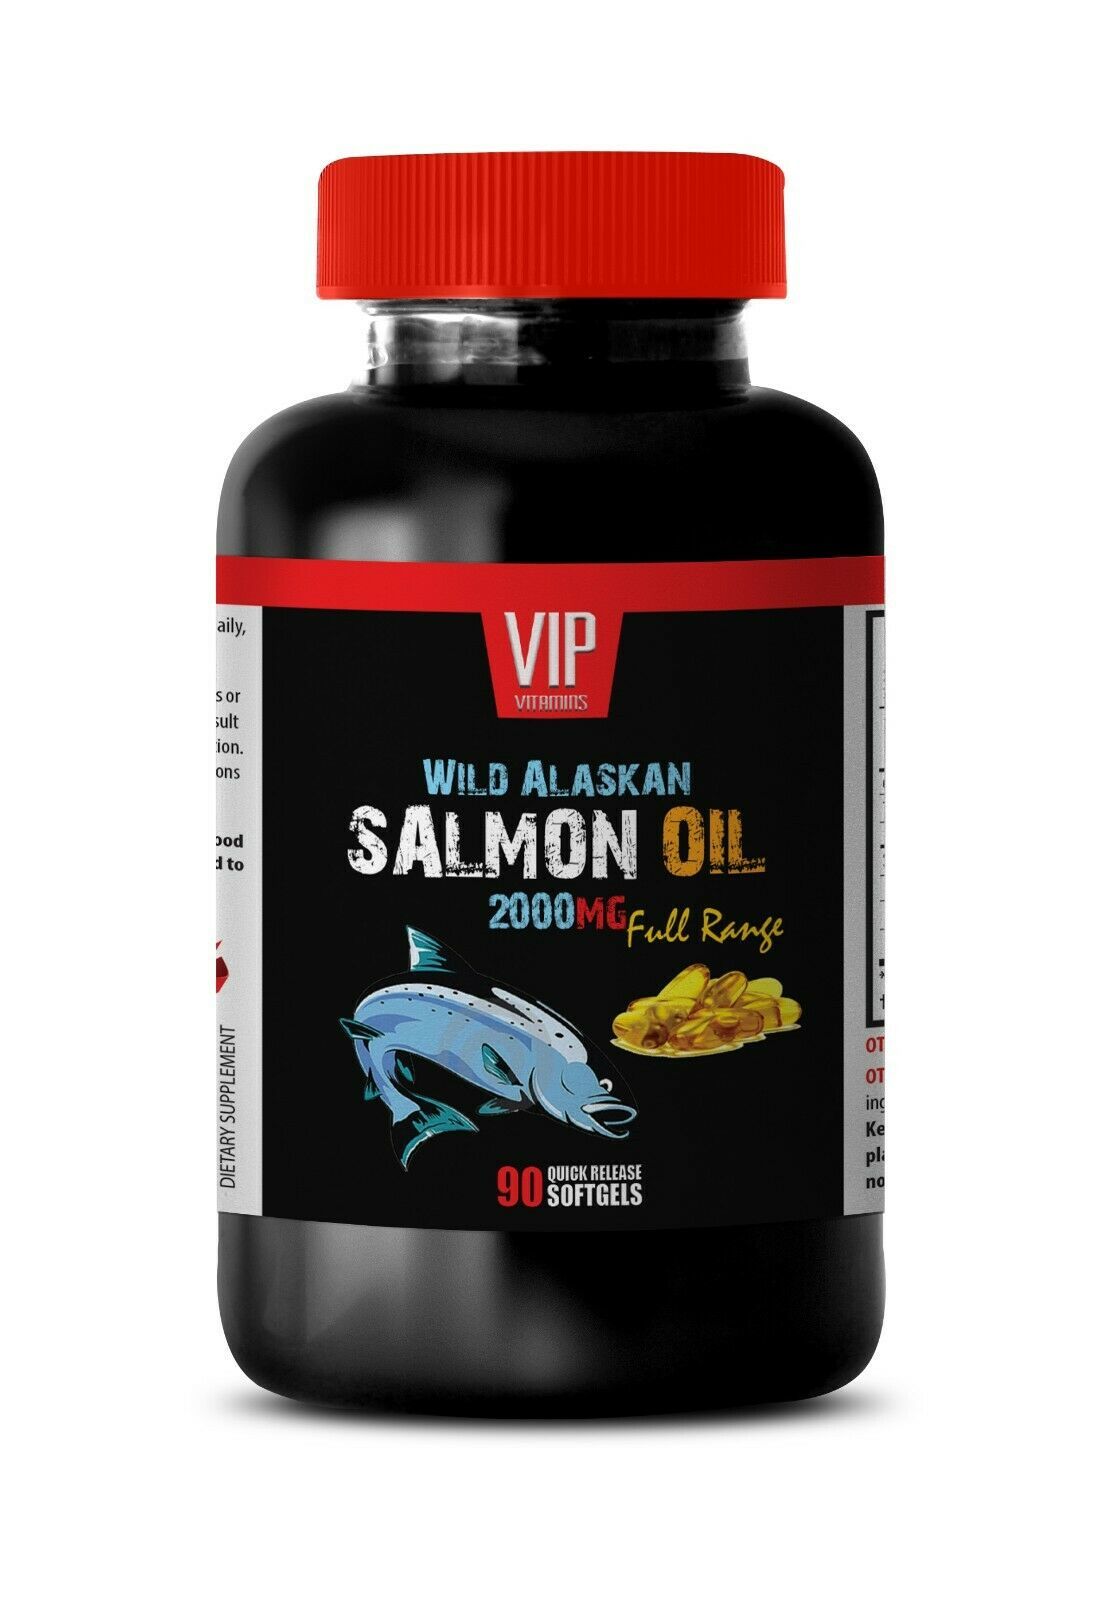 salmon oil supplement - WILD SALMON OIL 2000mg - natural appetite suppressant 1B - $14.92